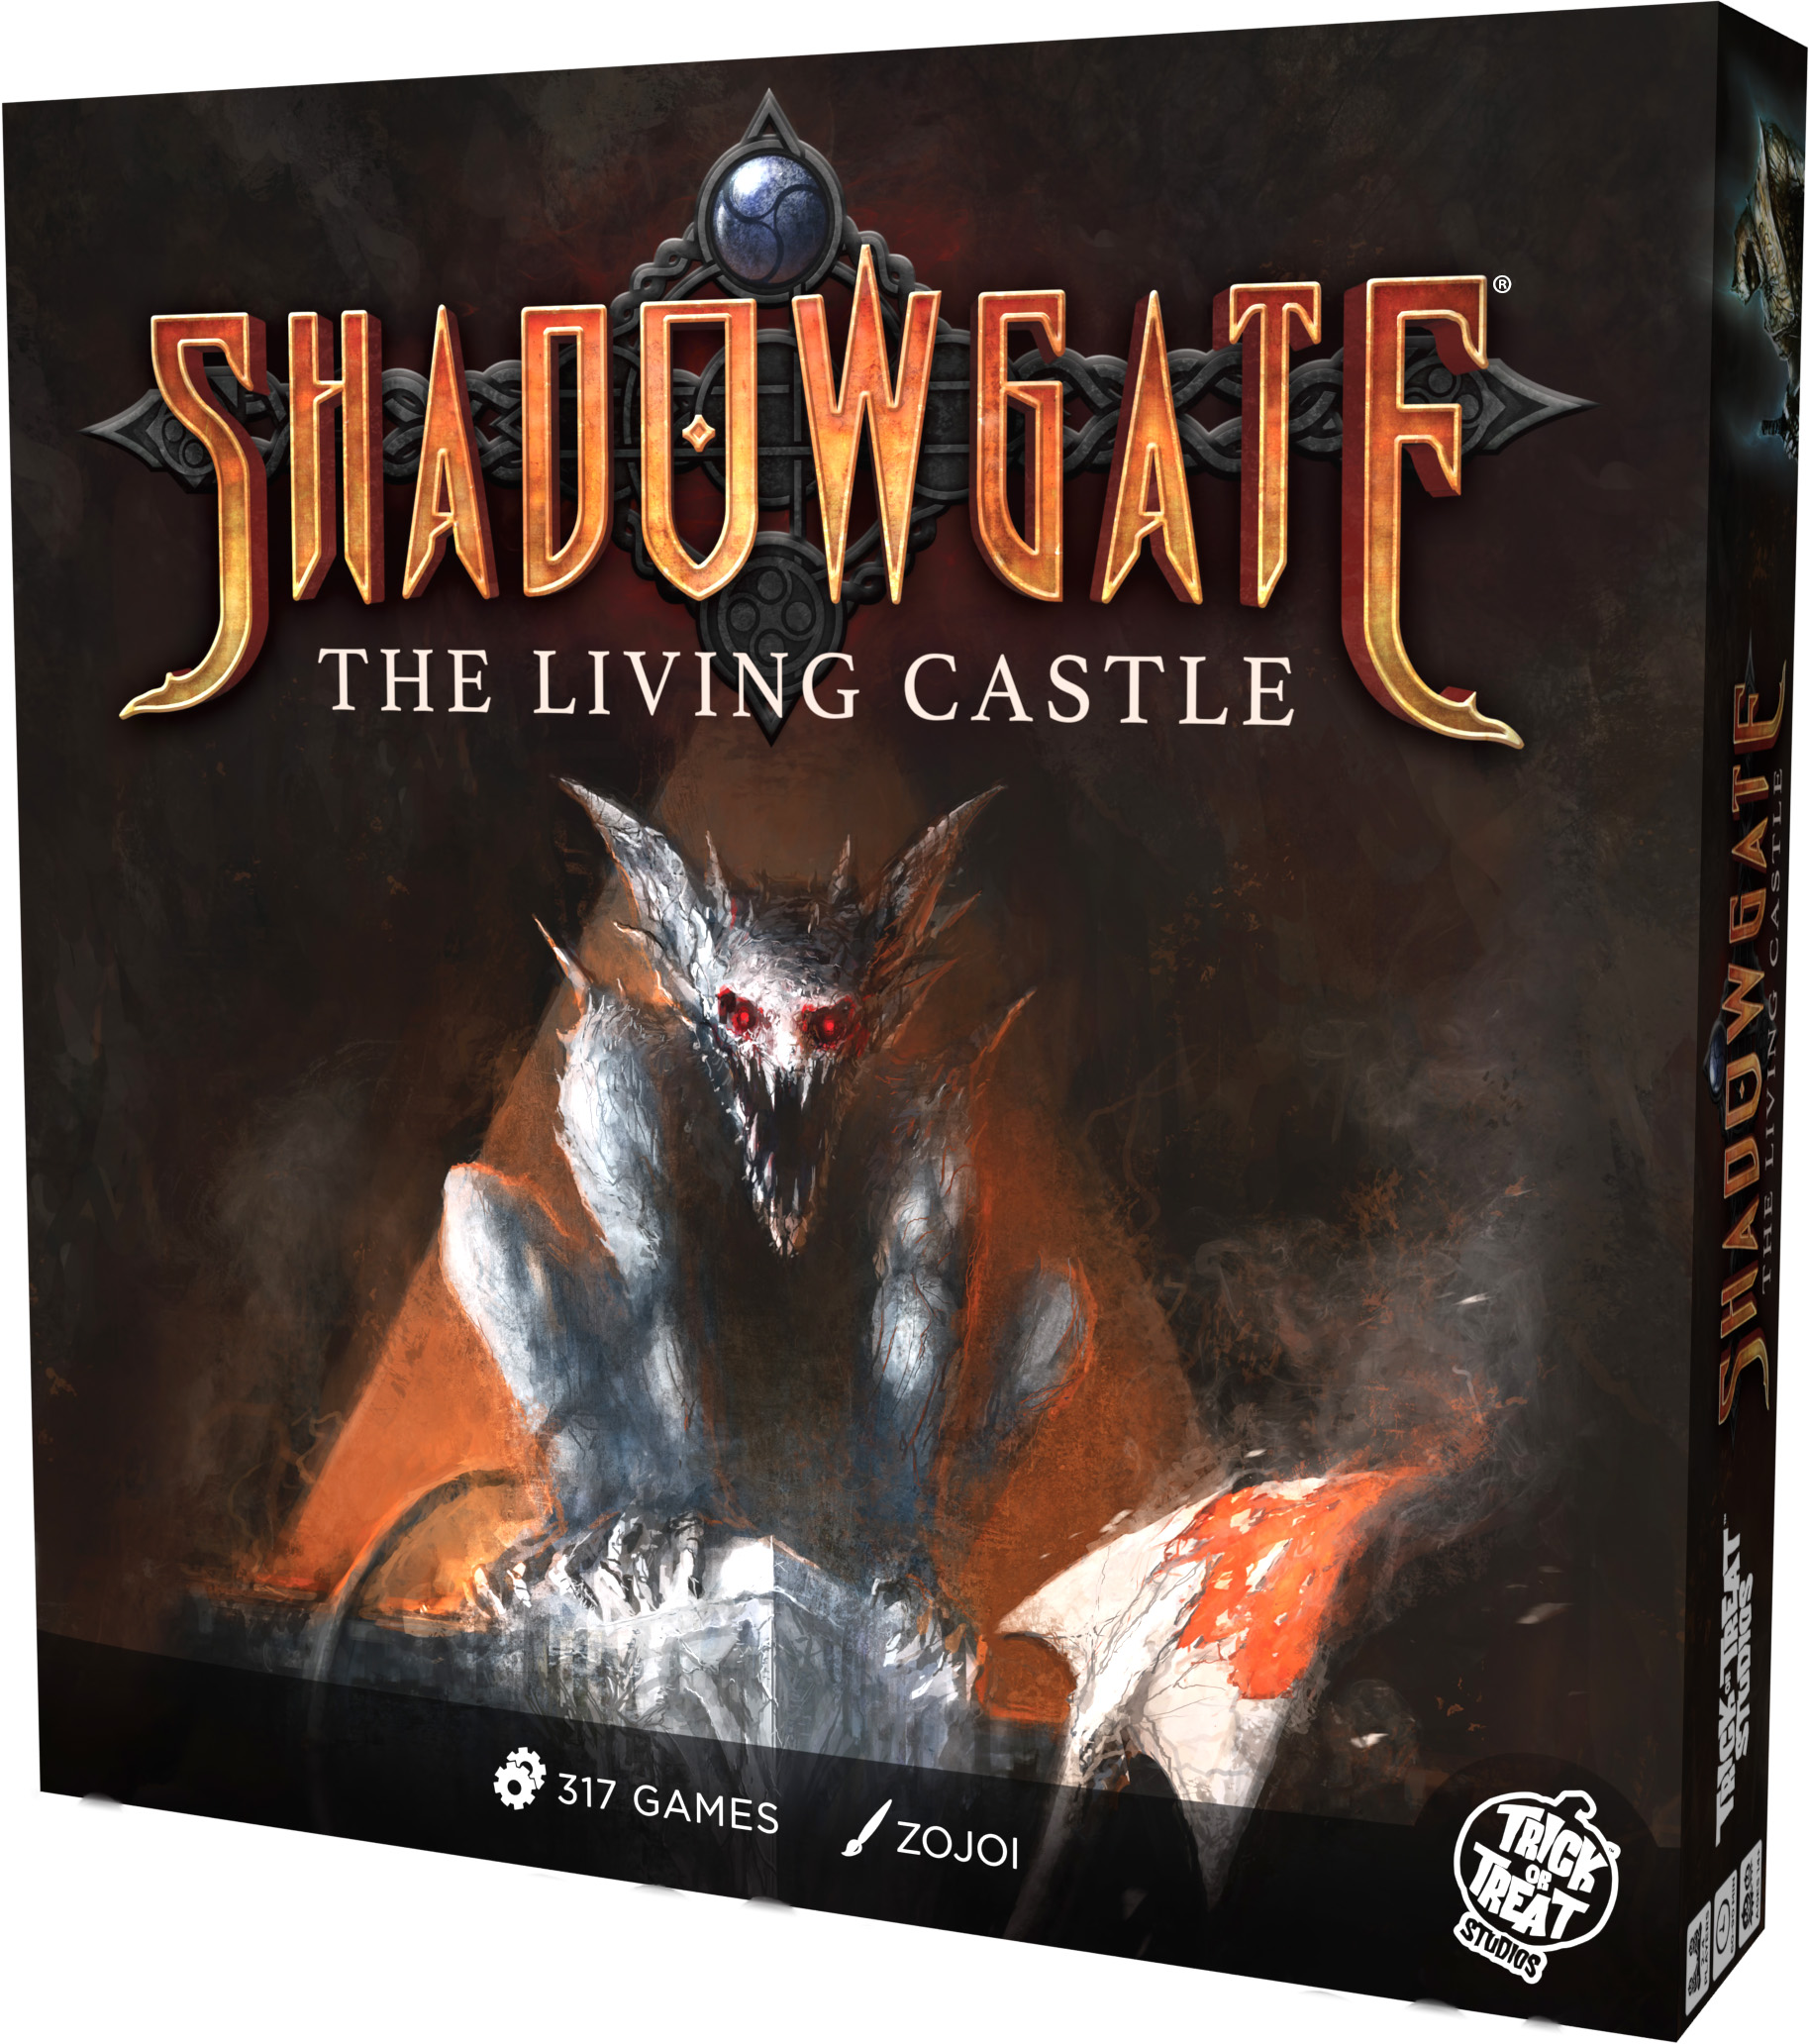 GTM #276 - Shadowgate: The Living Castle